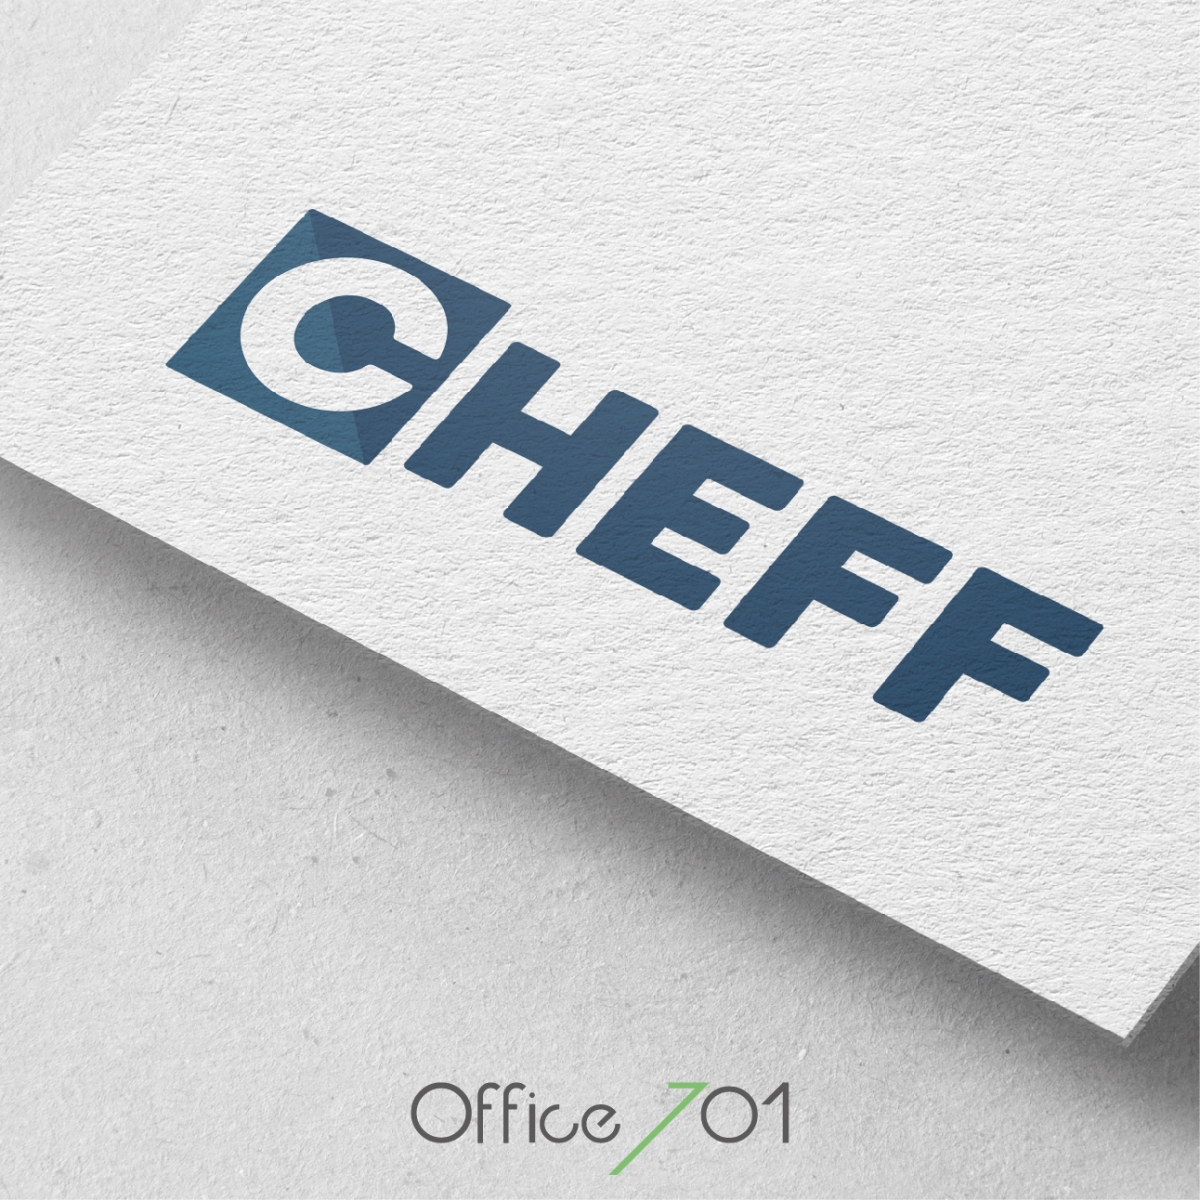 Office701 | Cheff Logo Tasarımı